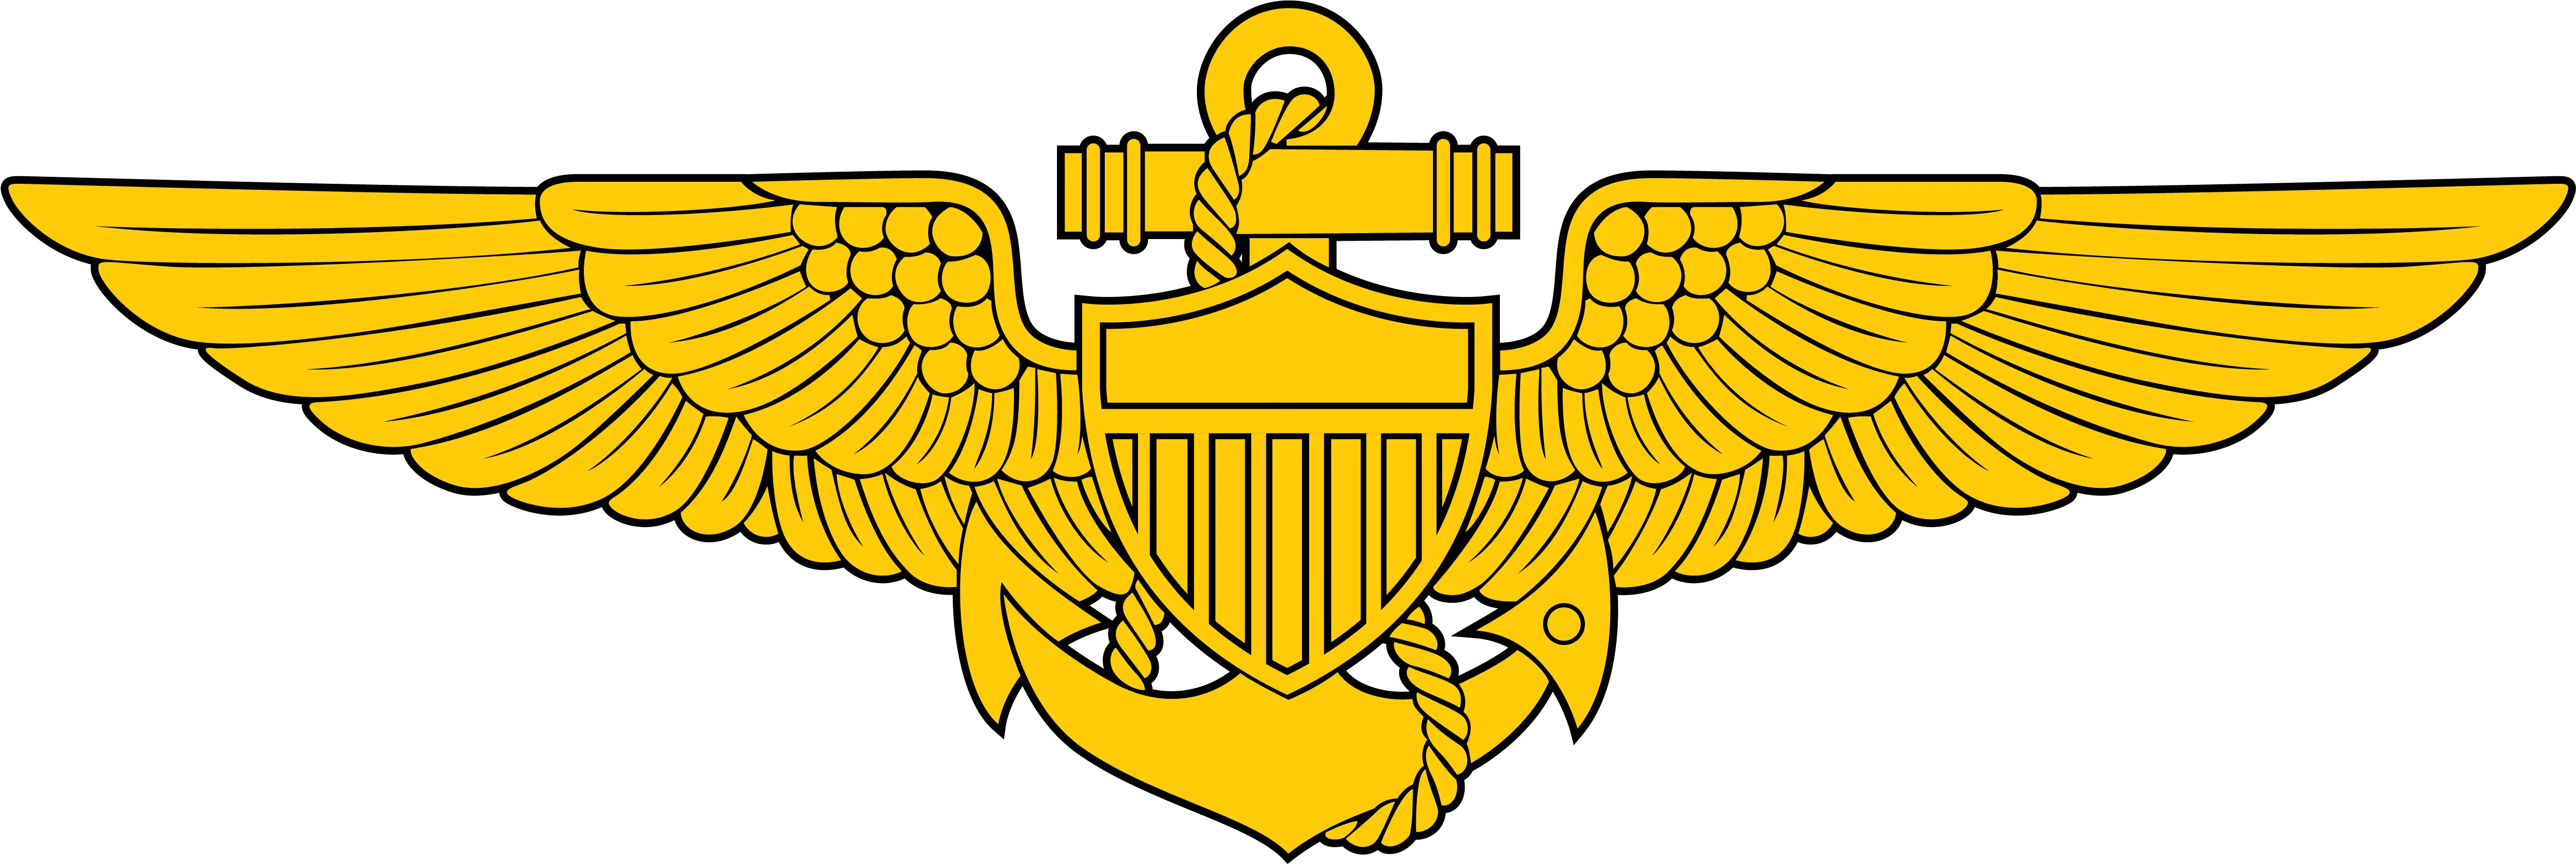 Popasmoke Logo And Wings High Naval Aviator Wings Png Wing Png